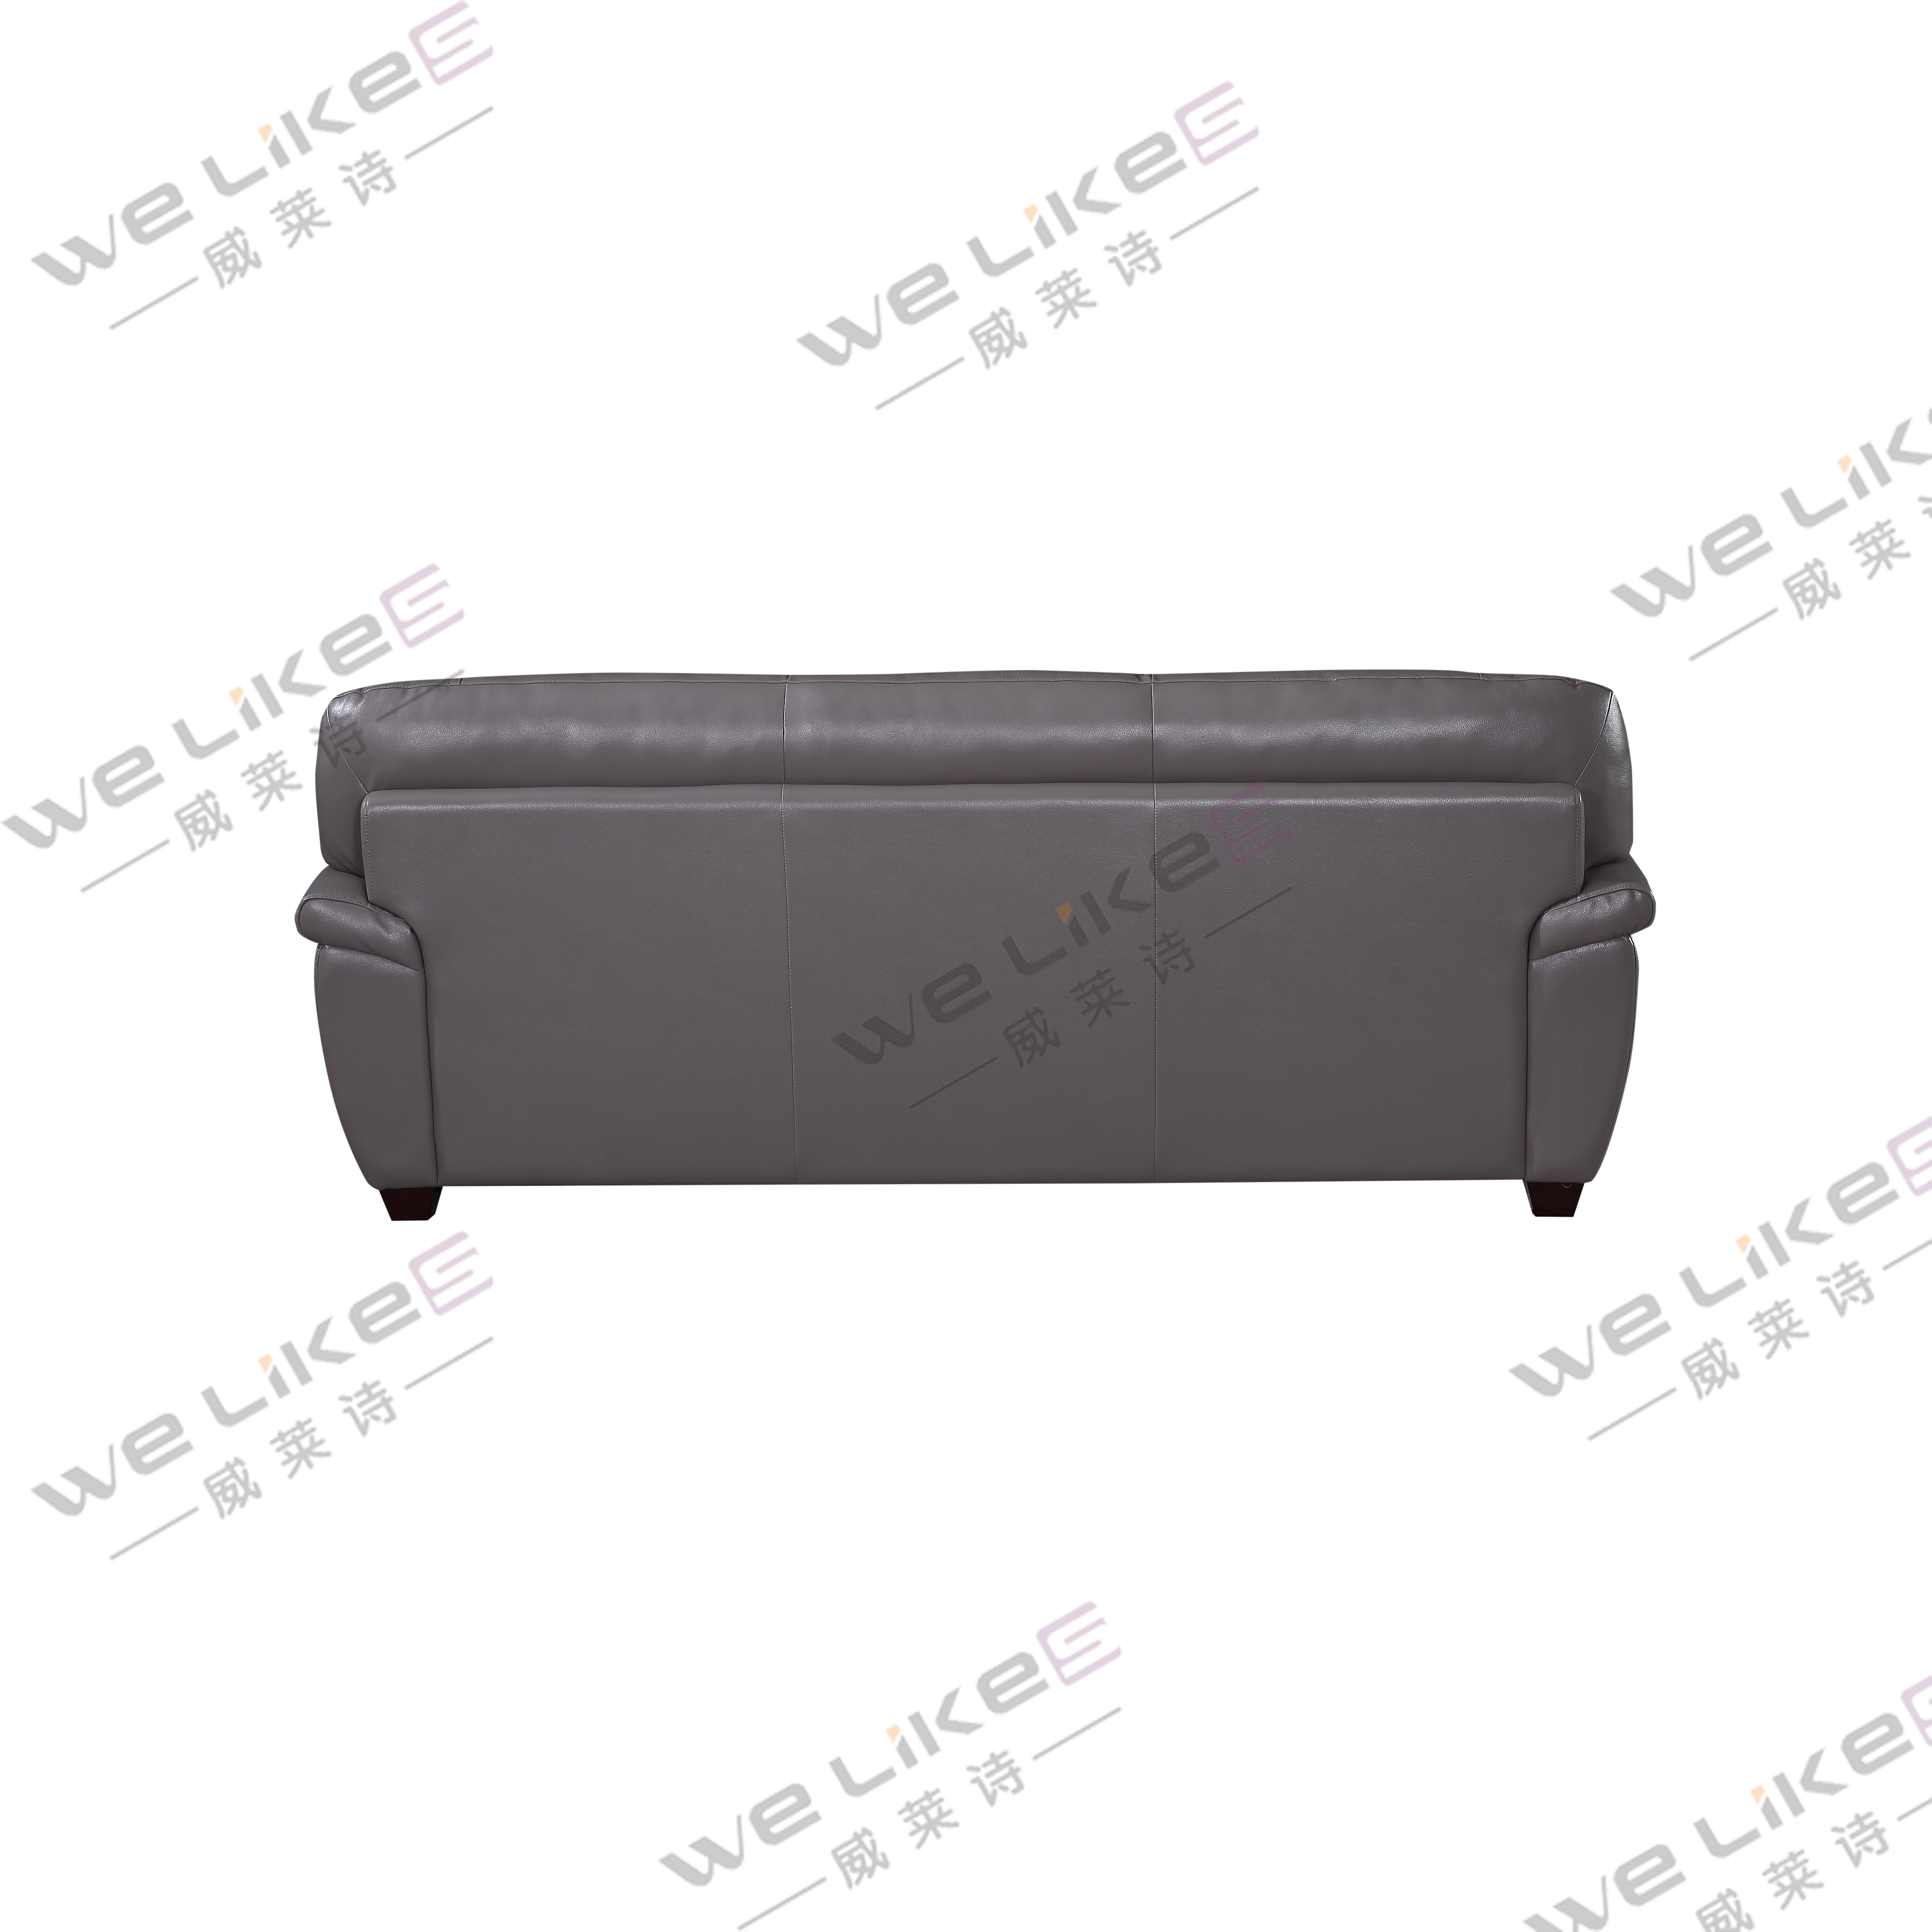 ZM812 Welikes Modern Leather Sofa